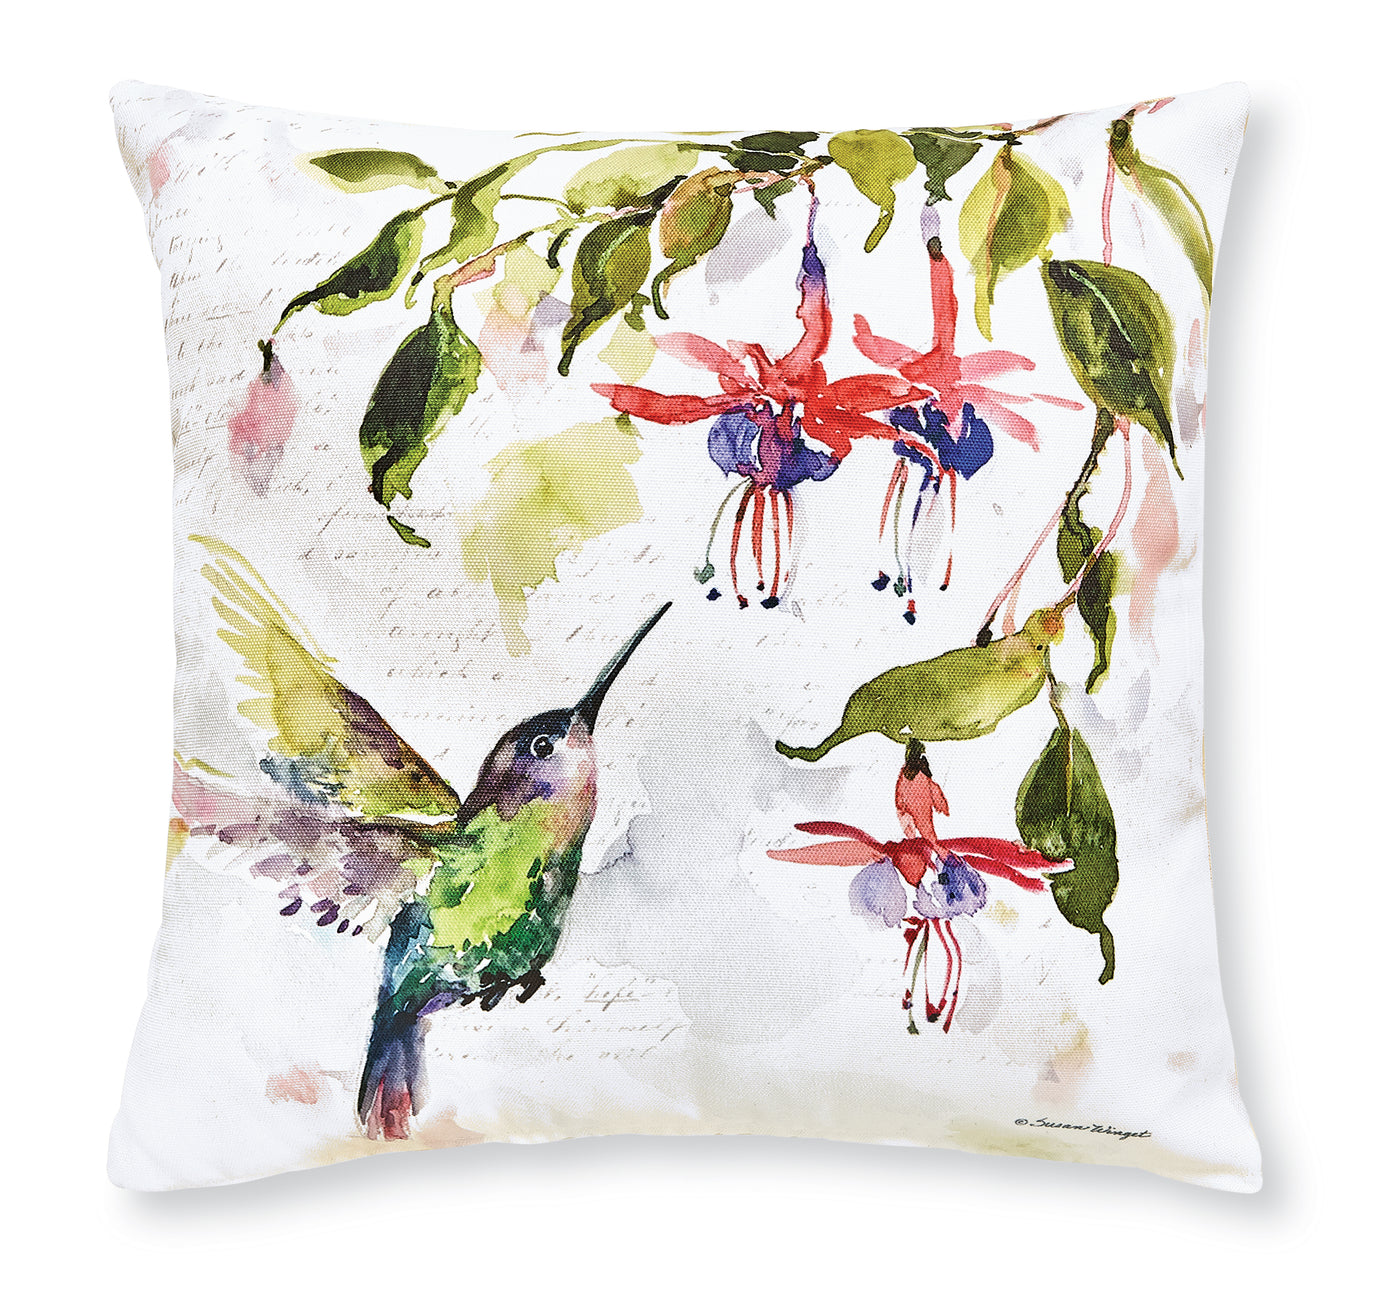 Hummingbird and Flowers Pillow I